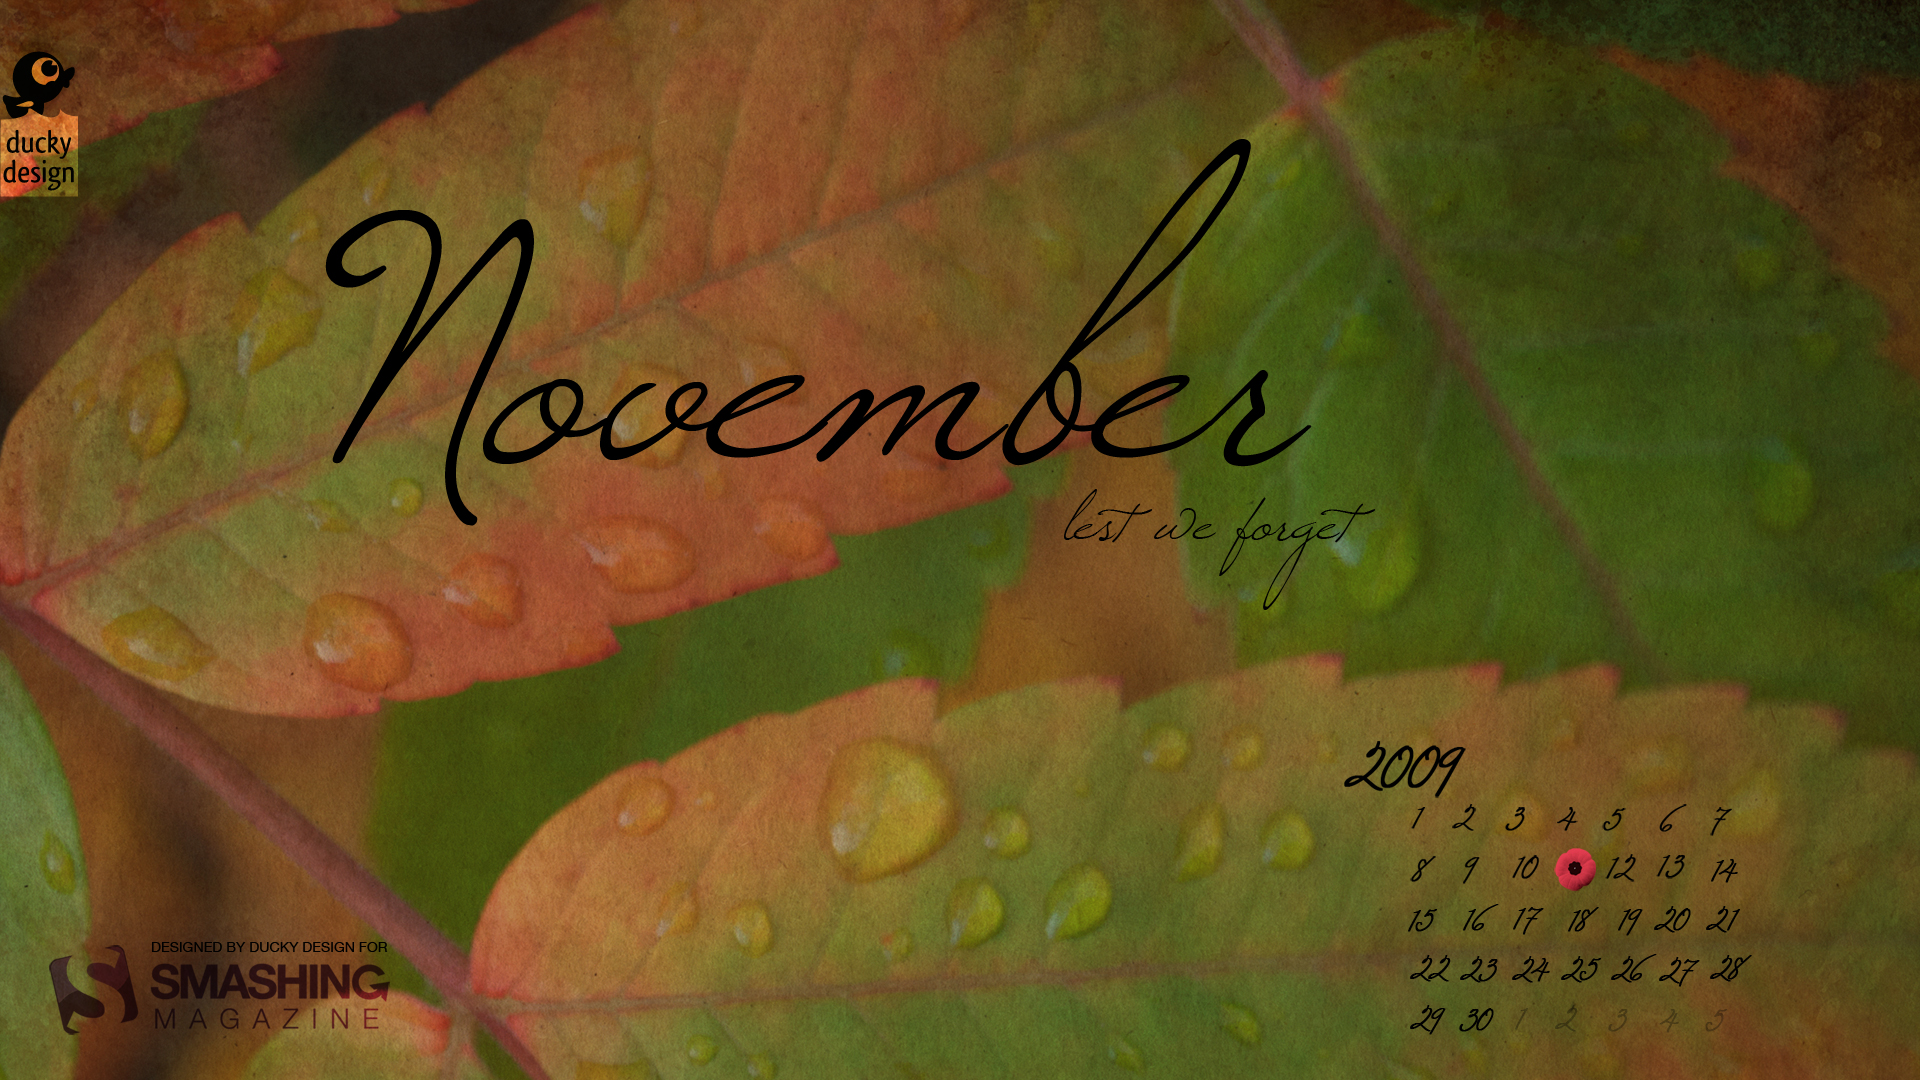 November Wallpaper Calendar